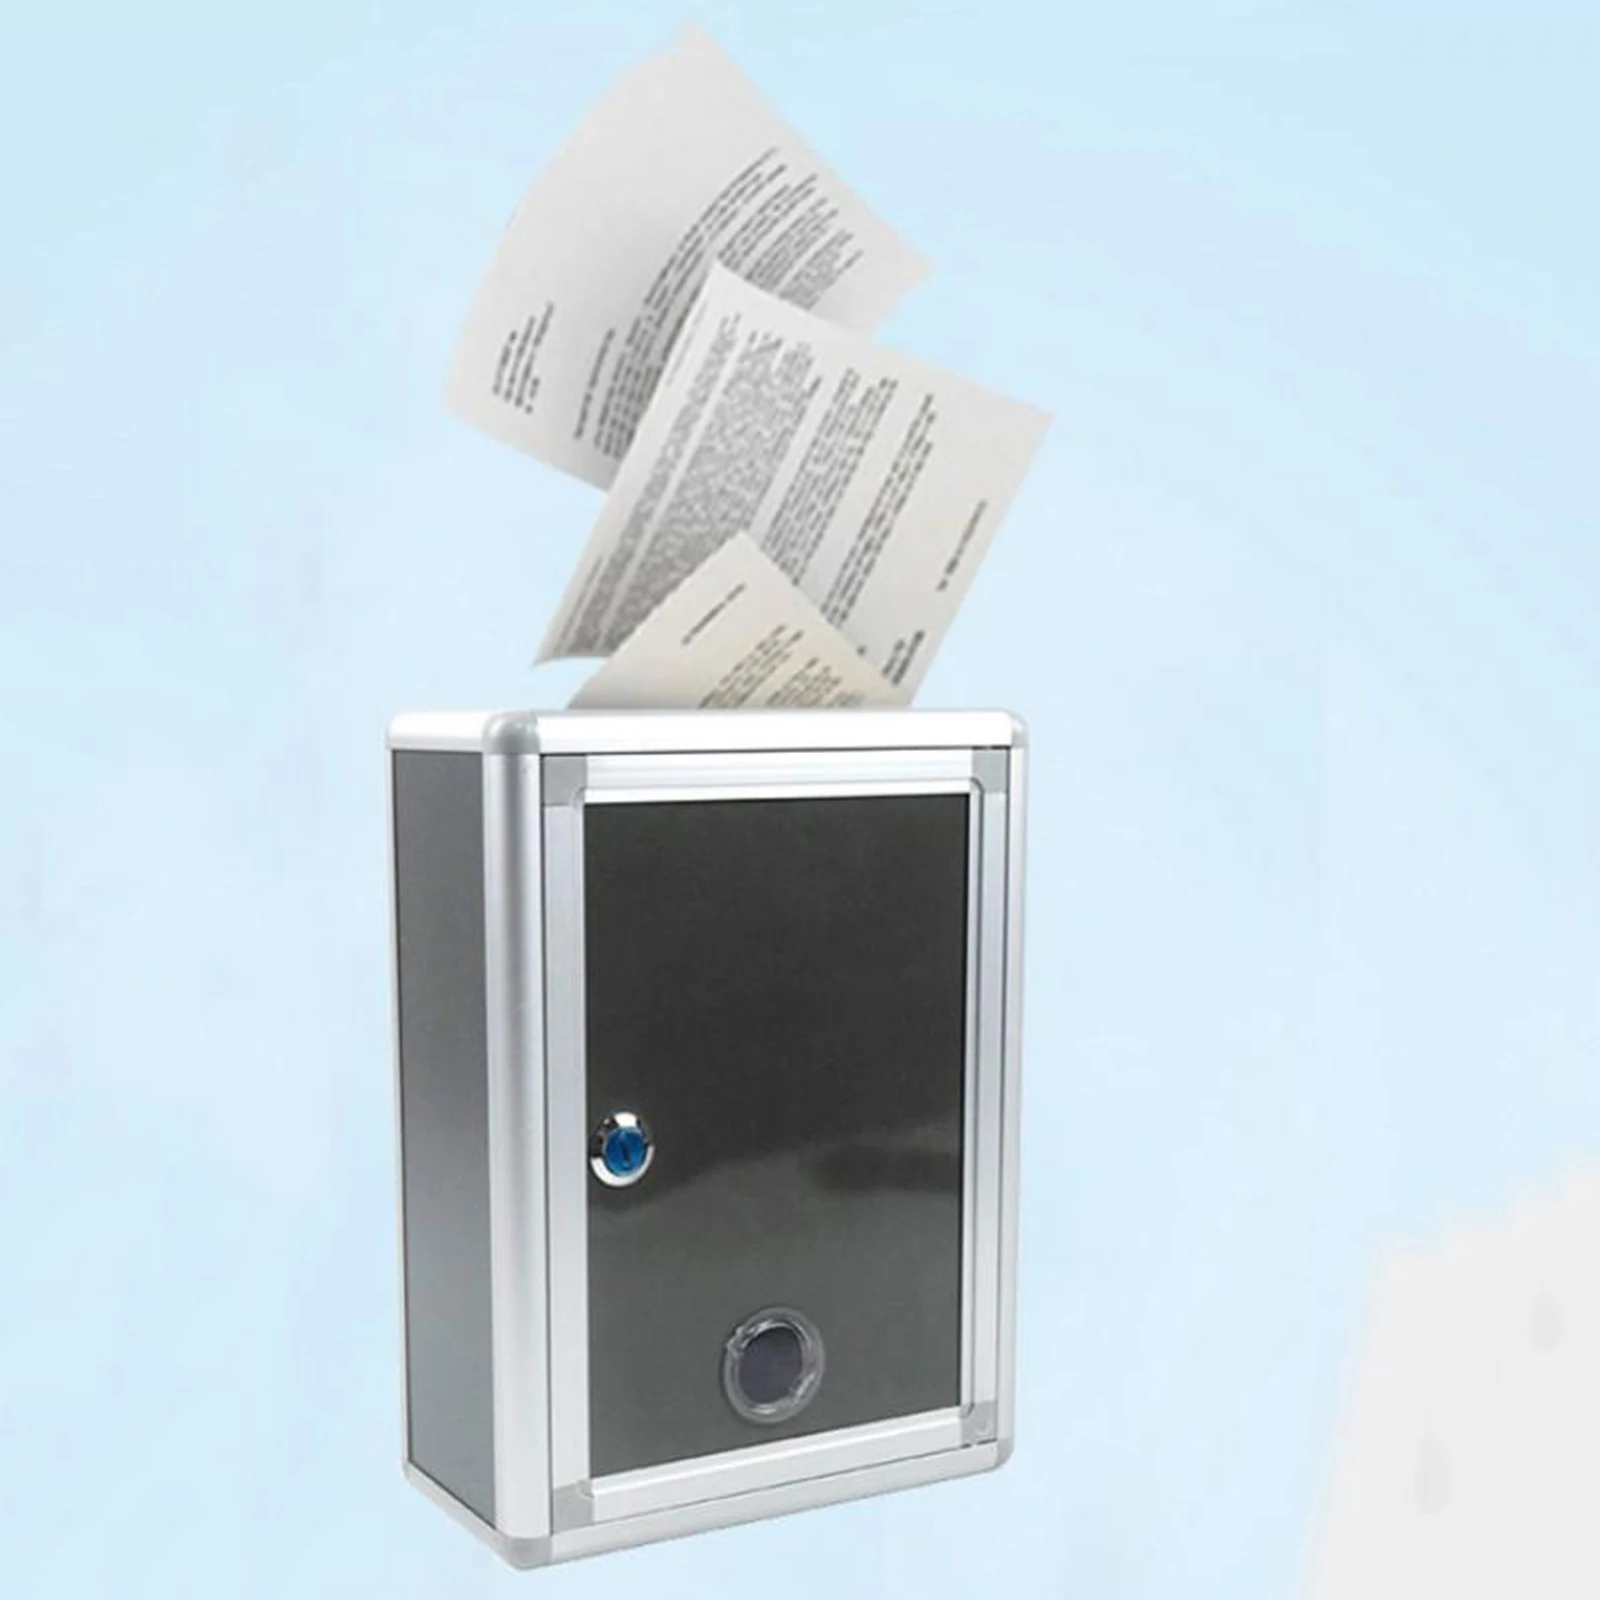 Mailbox Mail Wall Mount Letterbox Ballot Comment Box Parcel Boxes &2 Keys